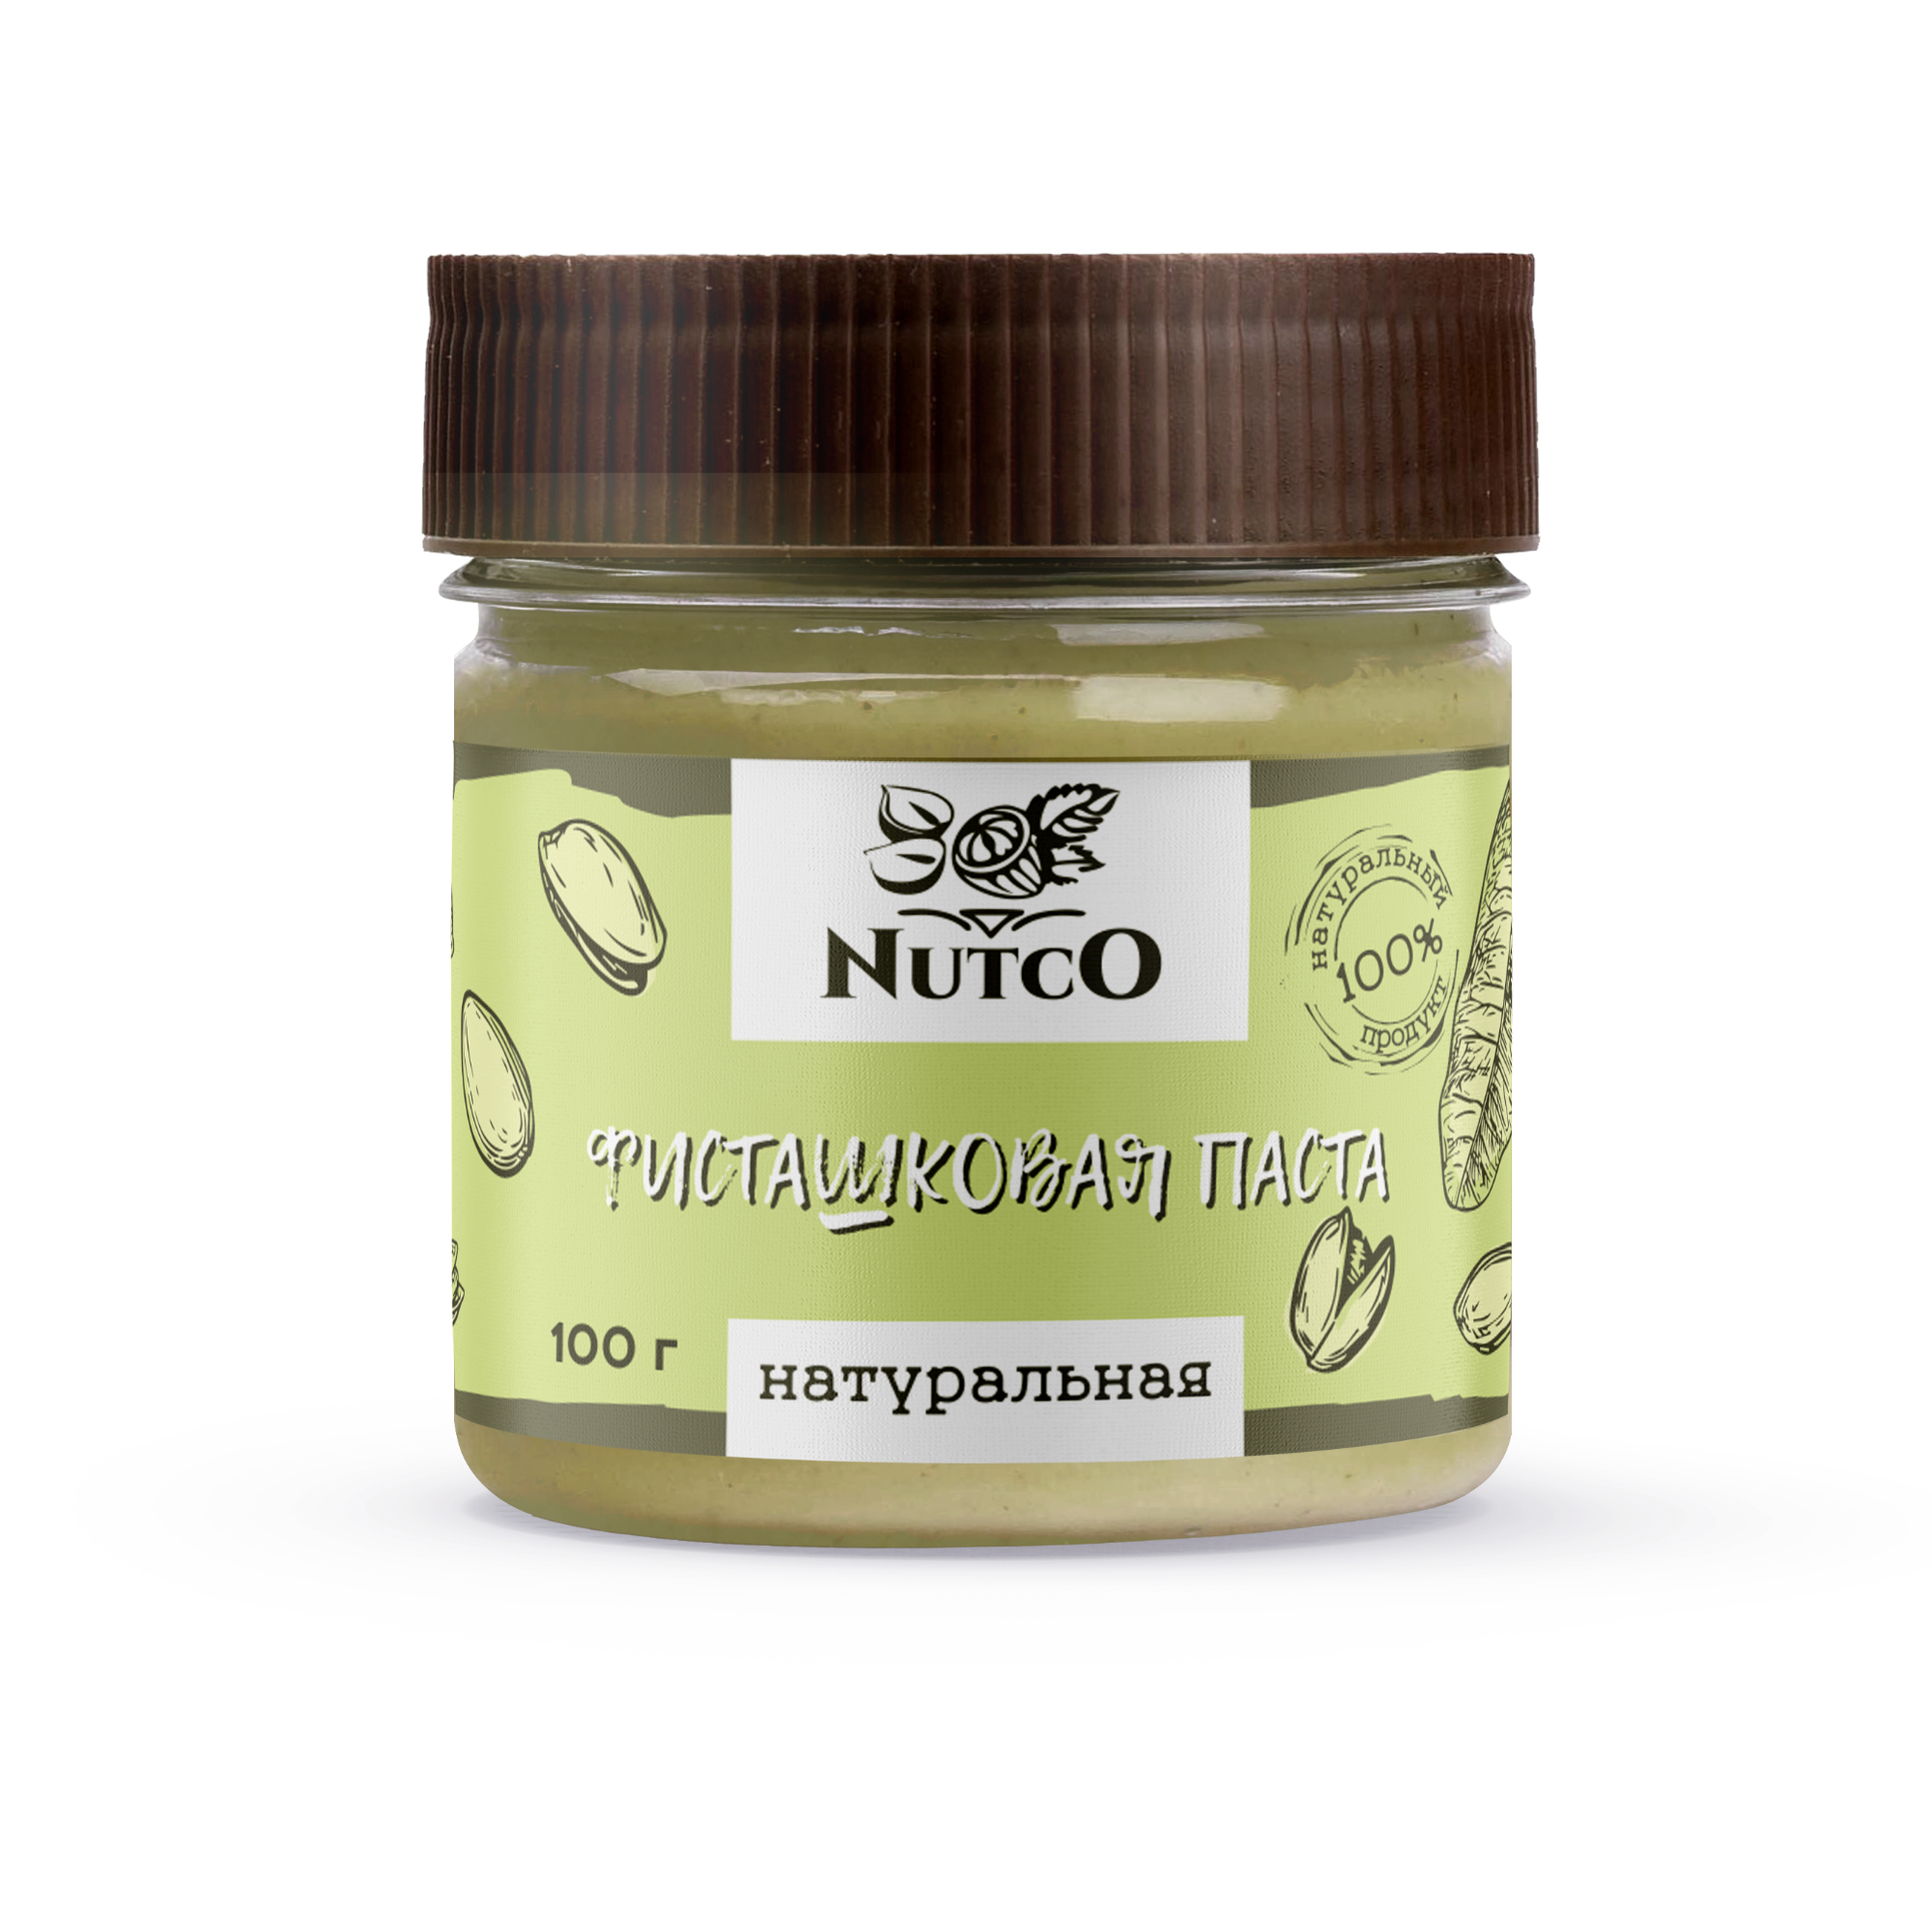 Фисташковая паста Nutco натуральная без сахара без добавок 100 г - фото 13